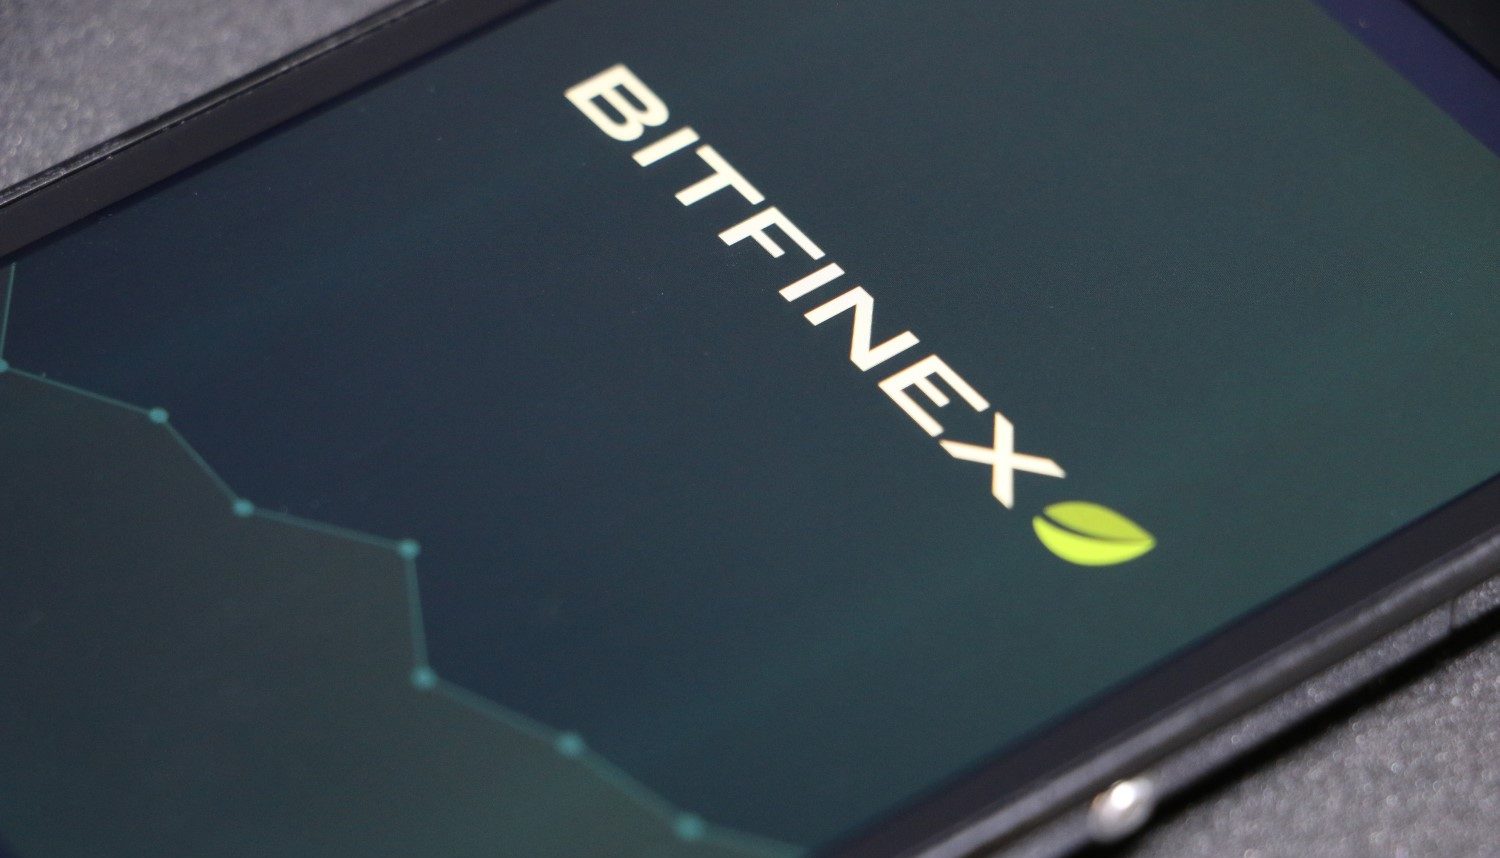 Bitfinex’s Private Token Sale Raised $1 Billion In 10 Days, Exec Says